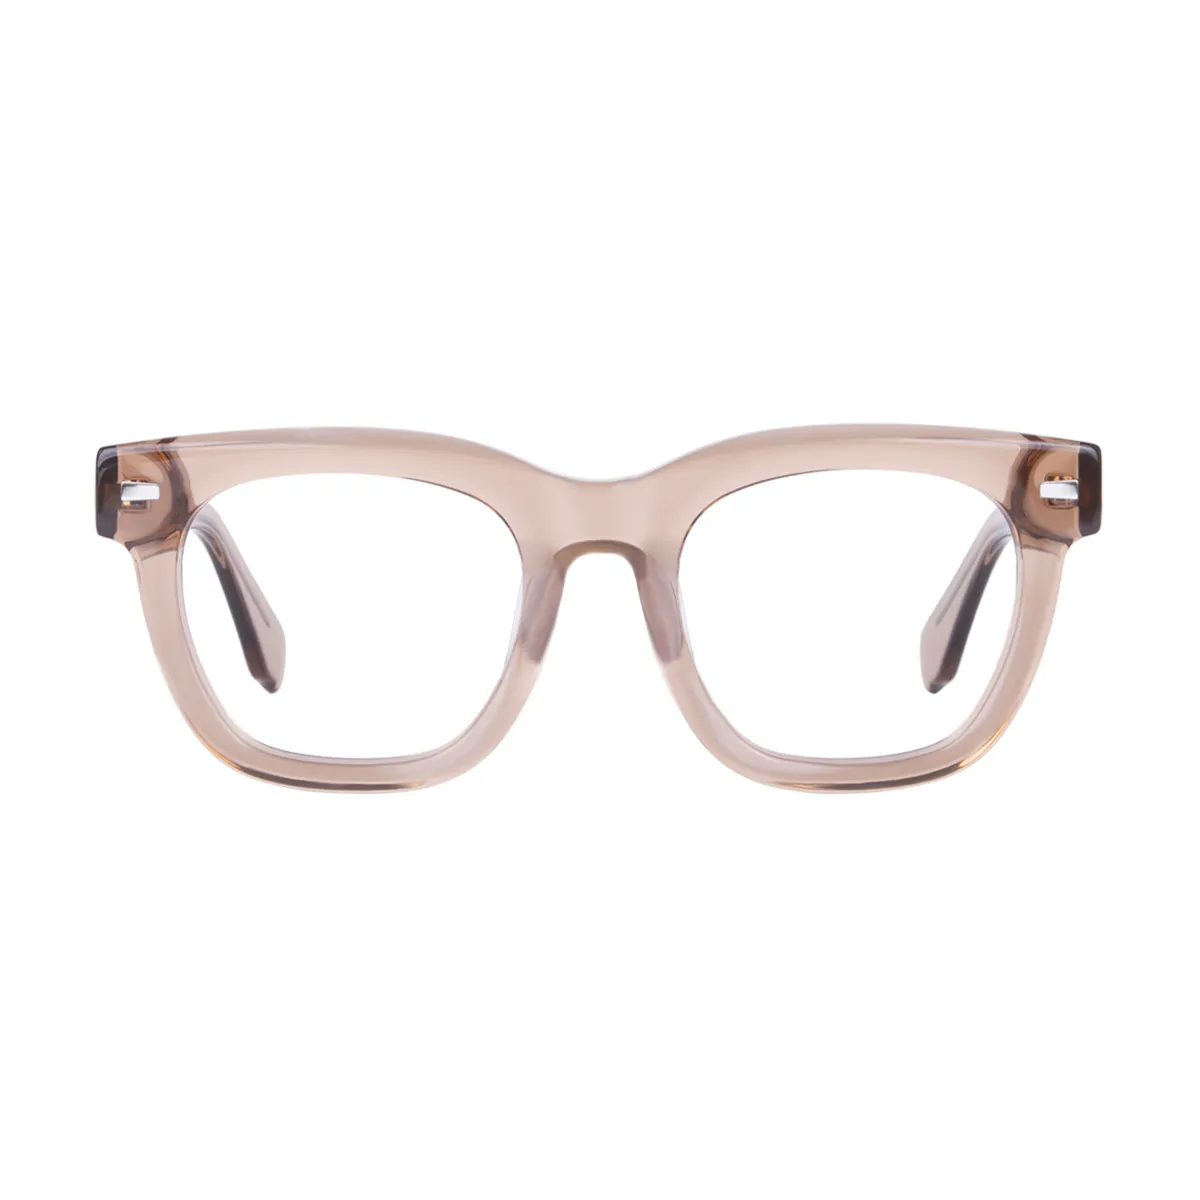 Morty - Square Brown Glasses for Men & Women